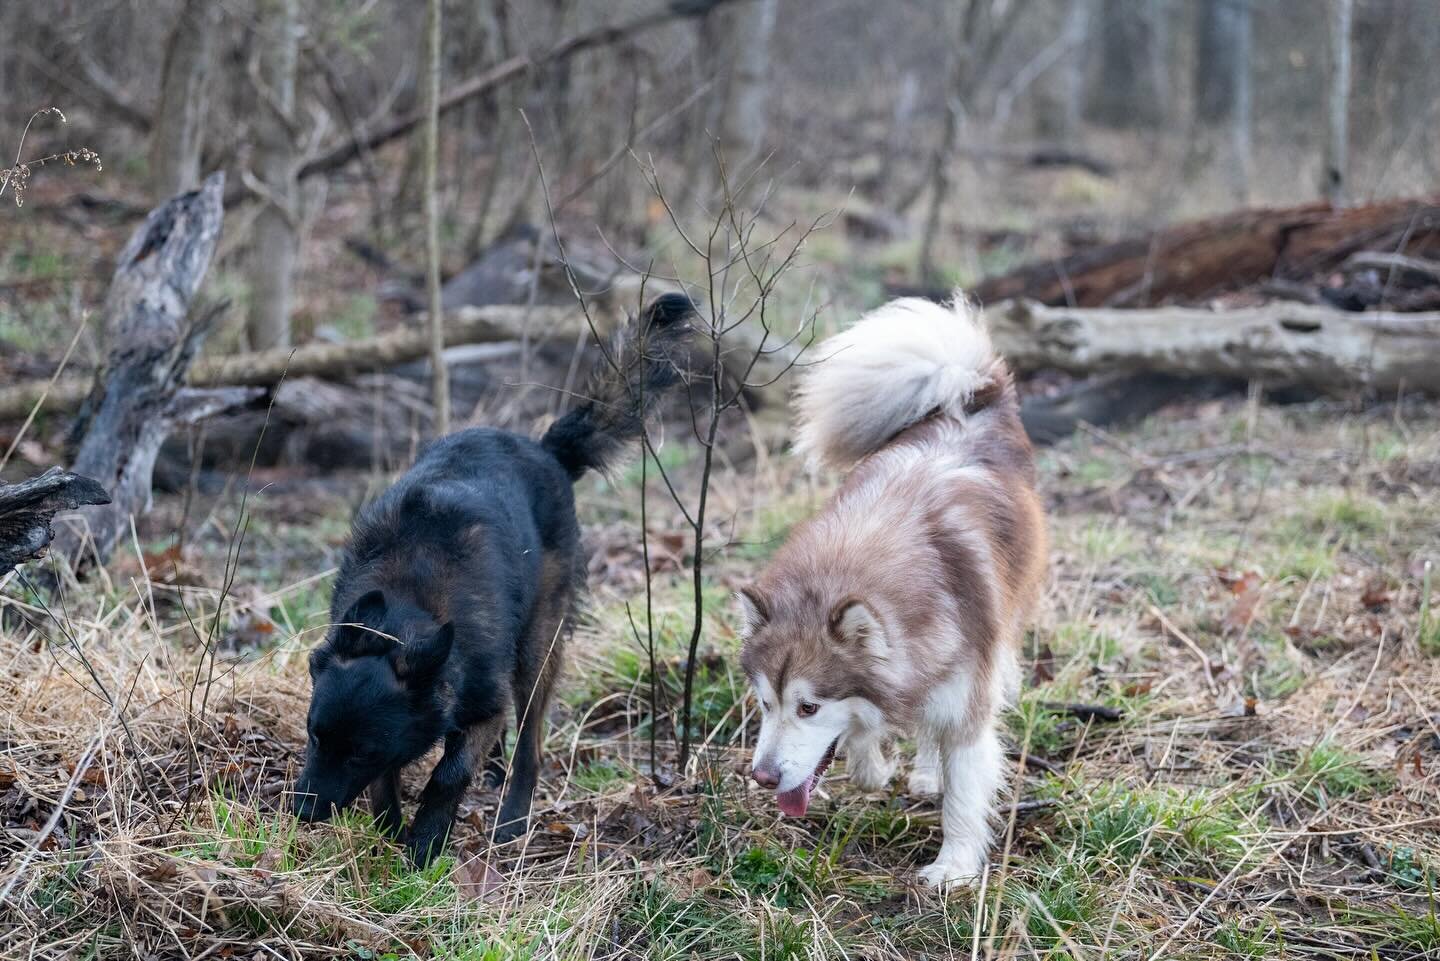 Just two besties playing in the woods. Arson and Reika 😁

#marvelousk9s #greywindmalamutes #malamutesofinstagram #redmalamute #malinois #belgianmalinois #bestfriends #inthewoods #cocanaltrail #marylandmalamutes #mazurstarkennel